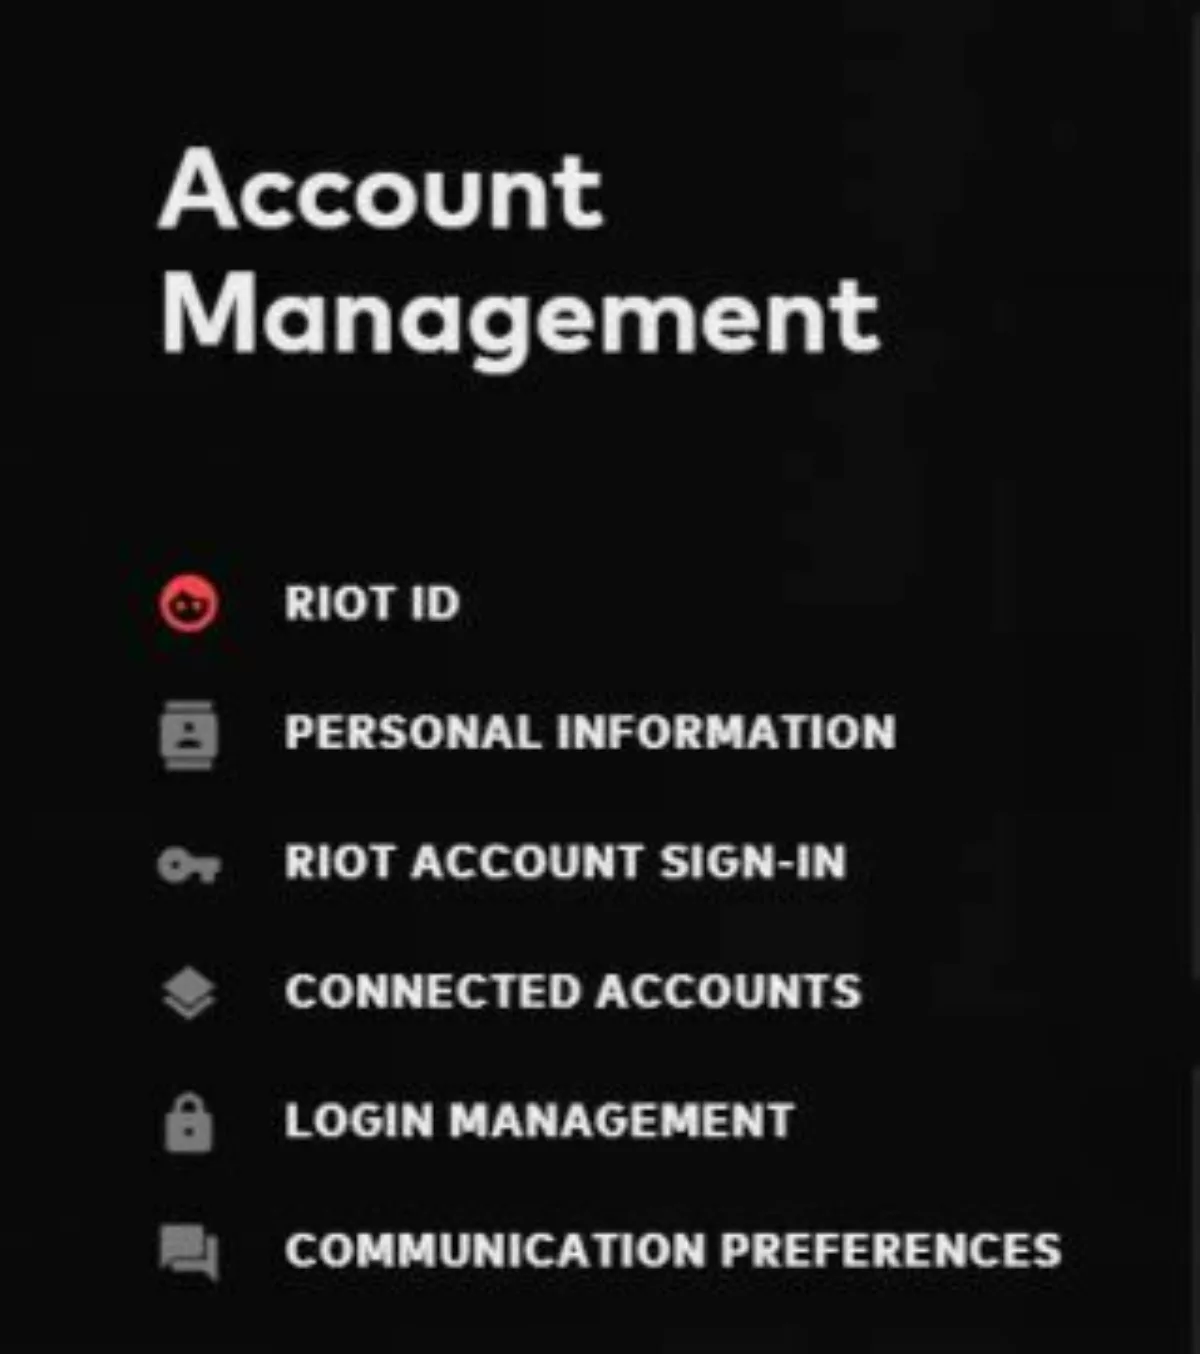 Account management